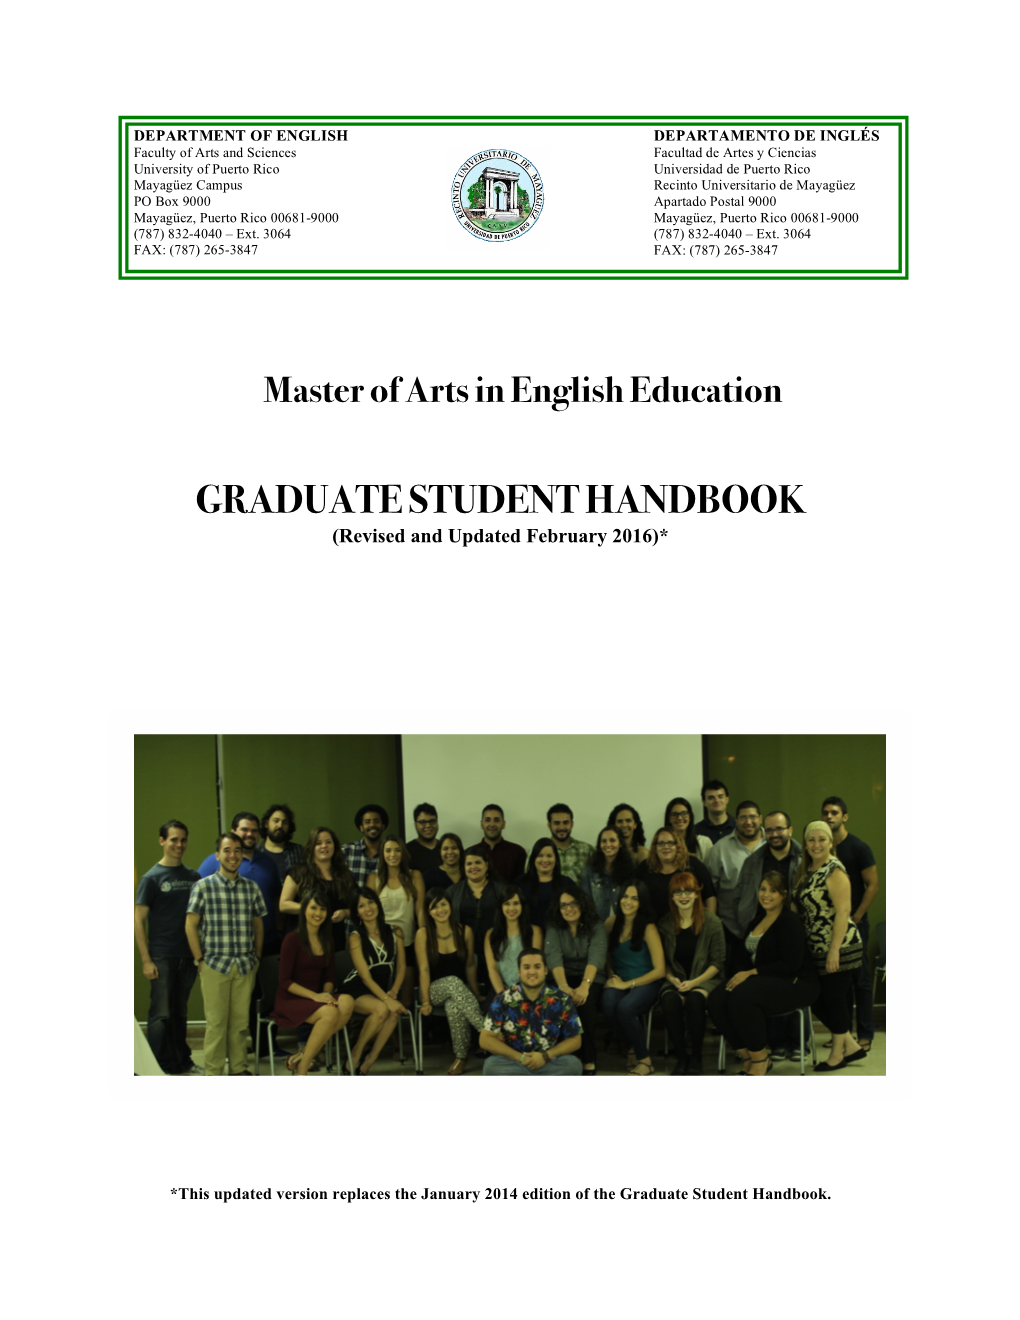 GRADUATE STUDENT HANDBOOK (Revised and Updated February 2016)*